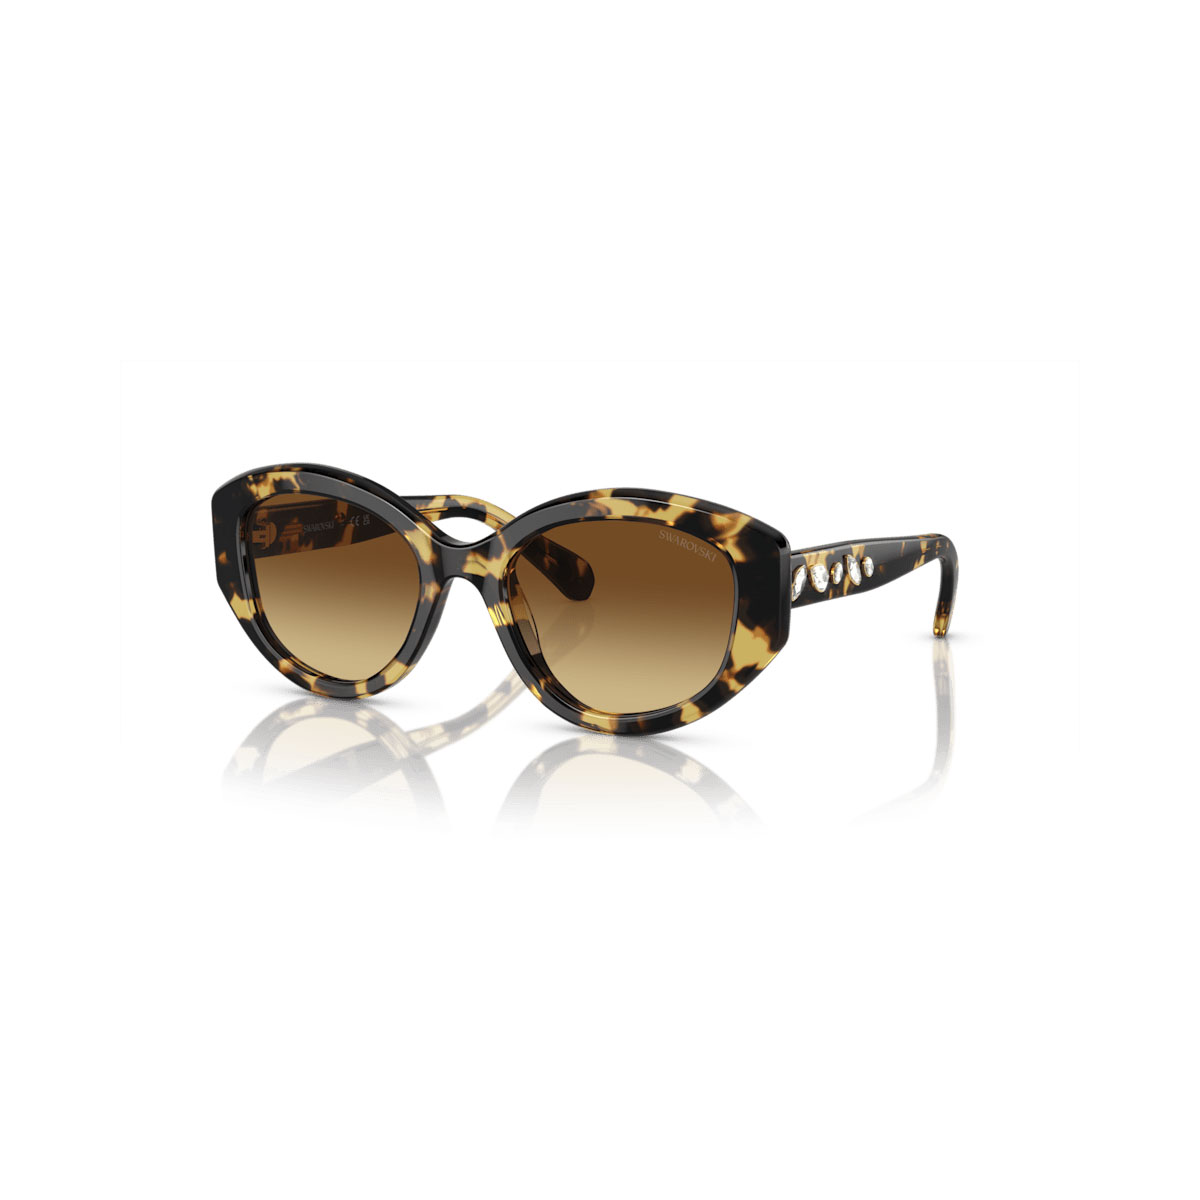 Swarovski Sunglasses, Cat-eye shape, Brown